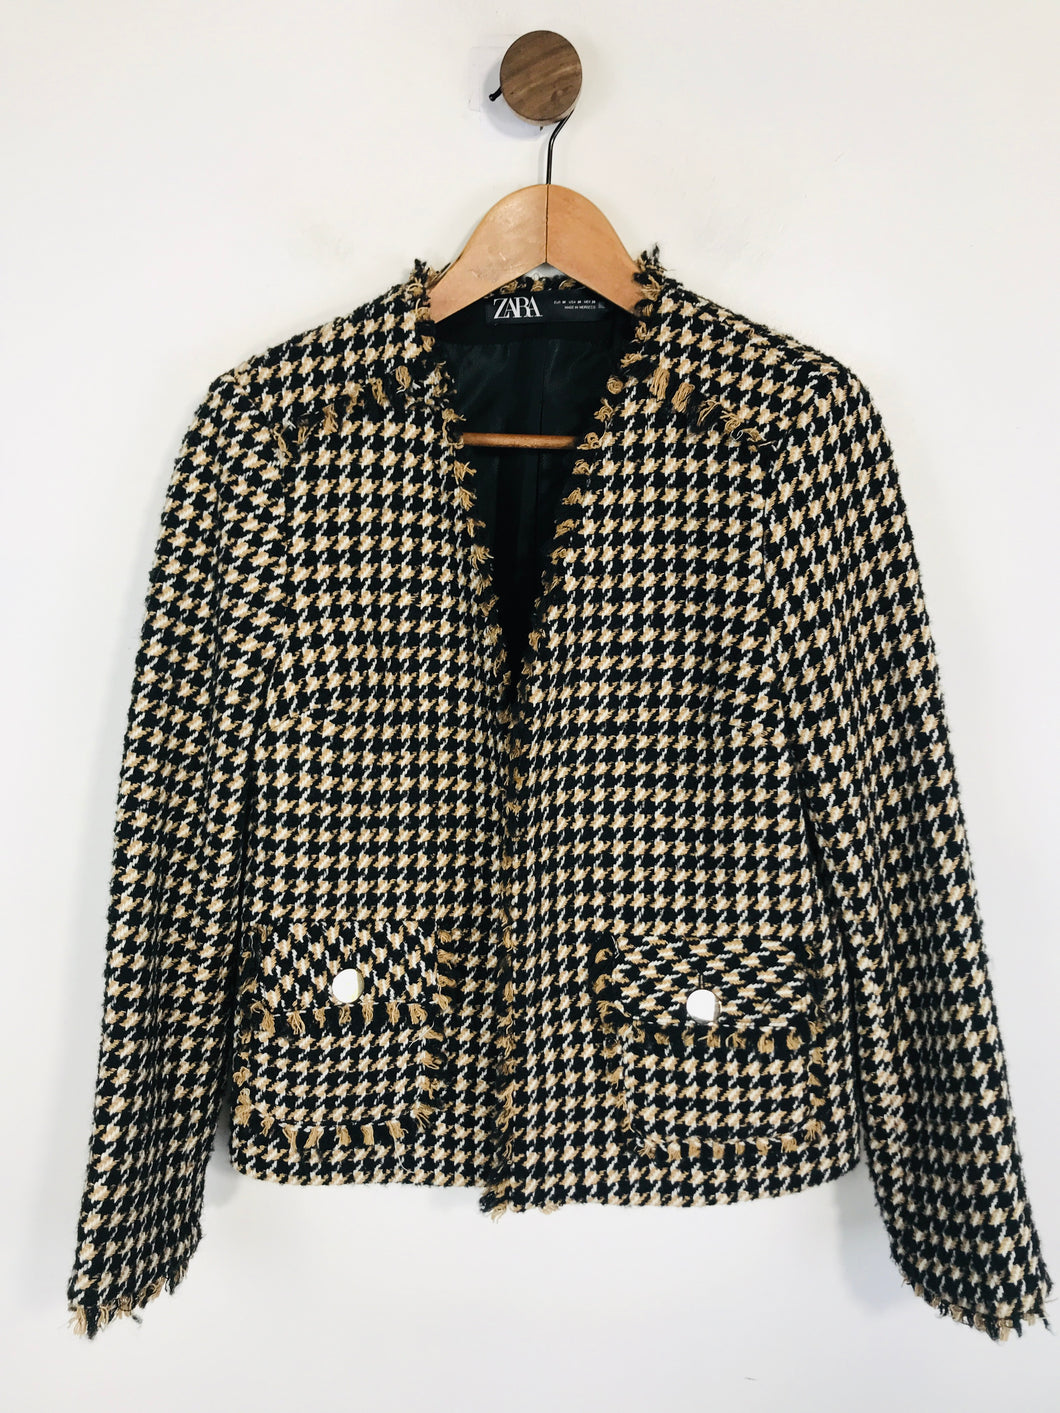 Zara Women's Tweed Collarless Blazer Jacket | M UK10-12 | Multicoloured